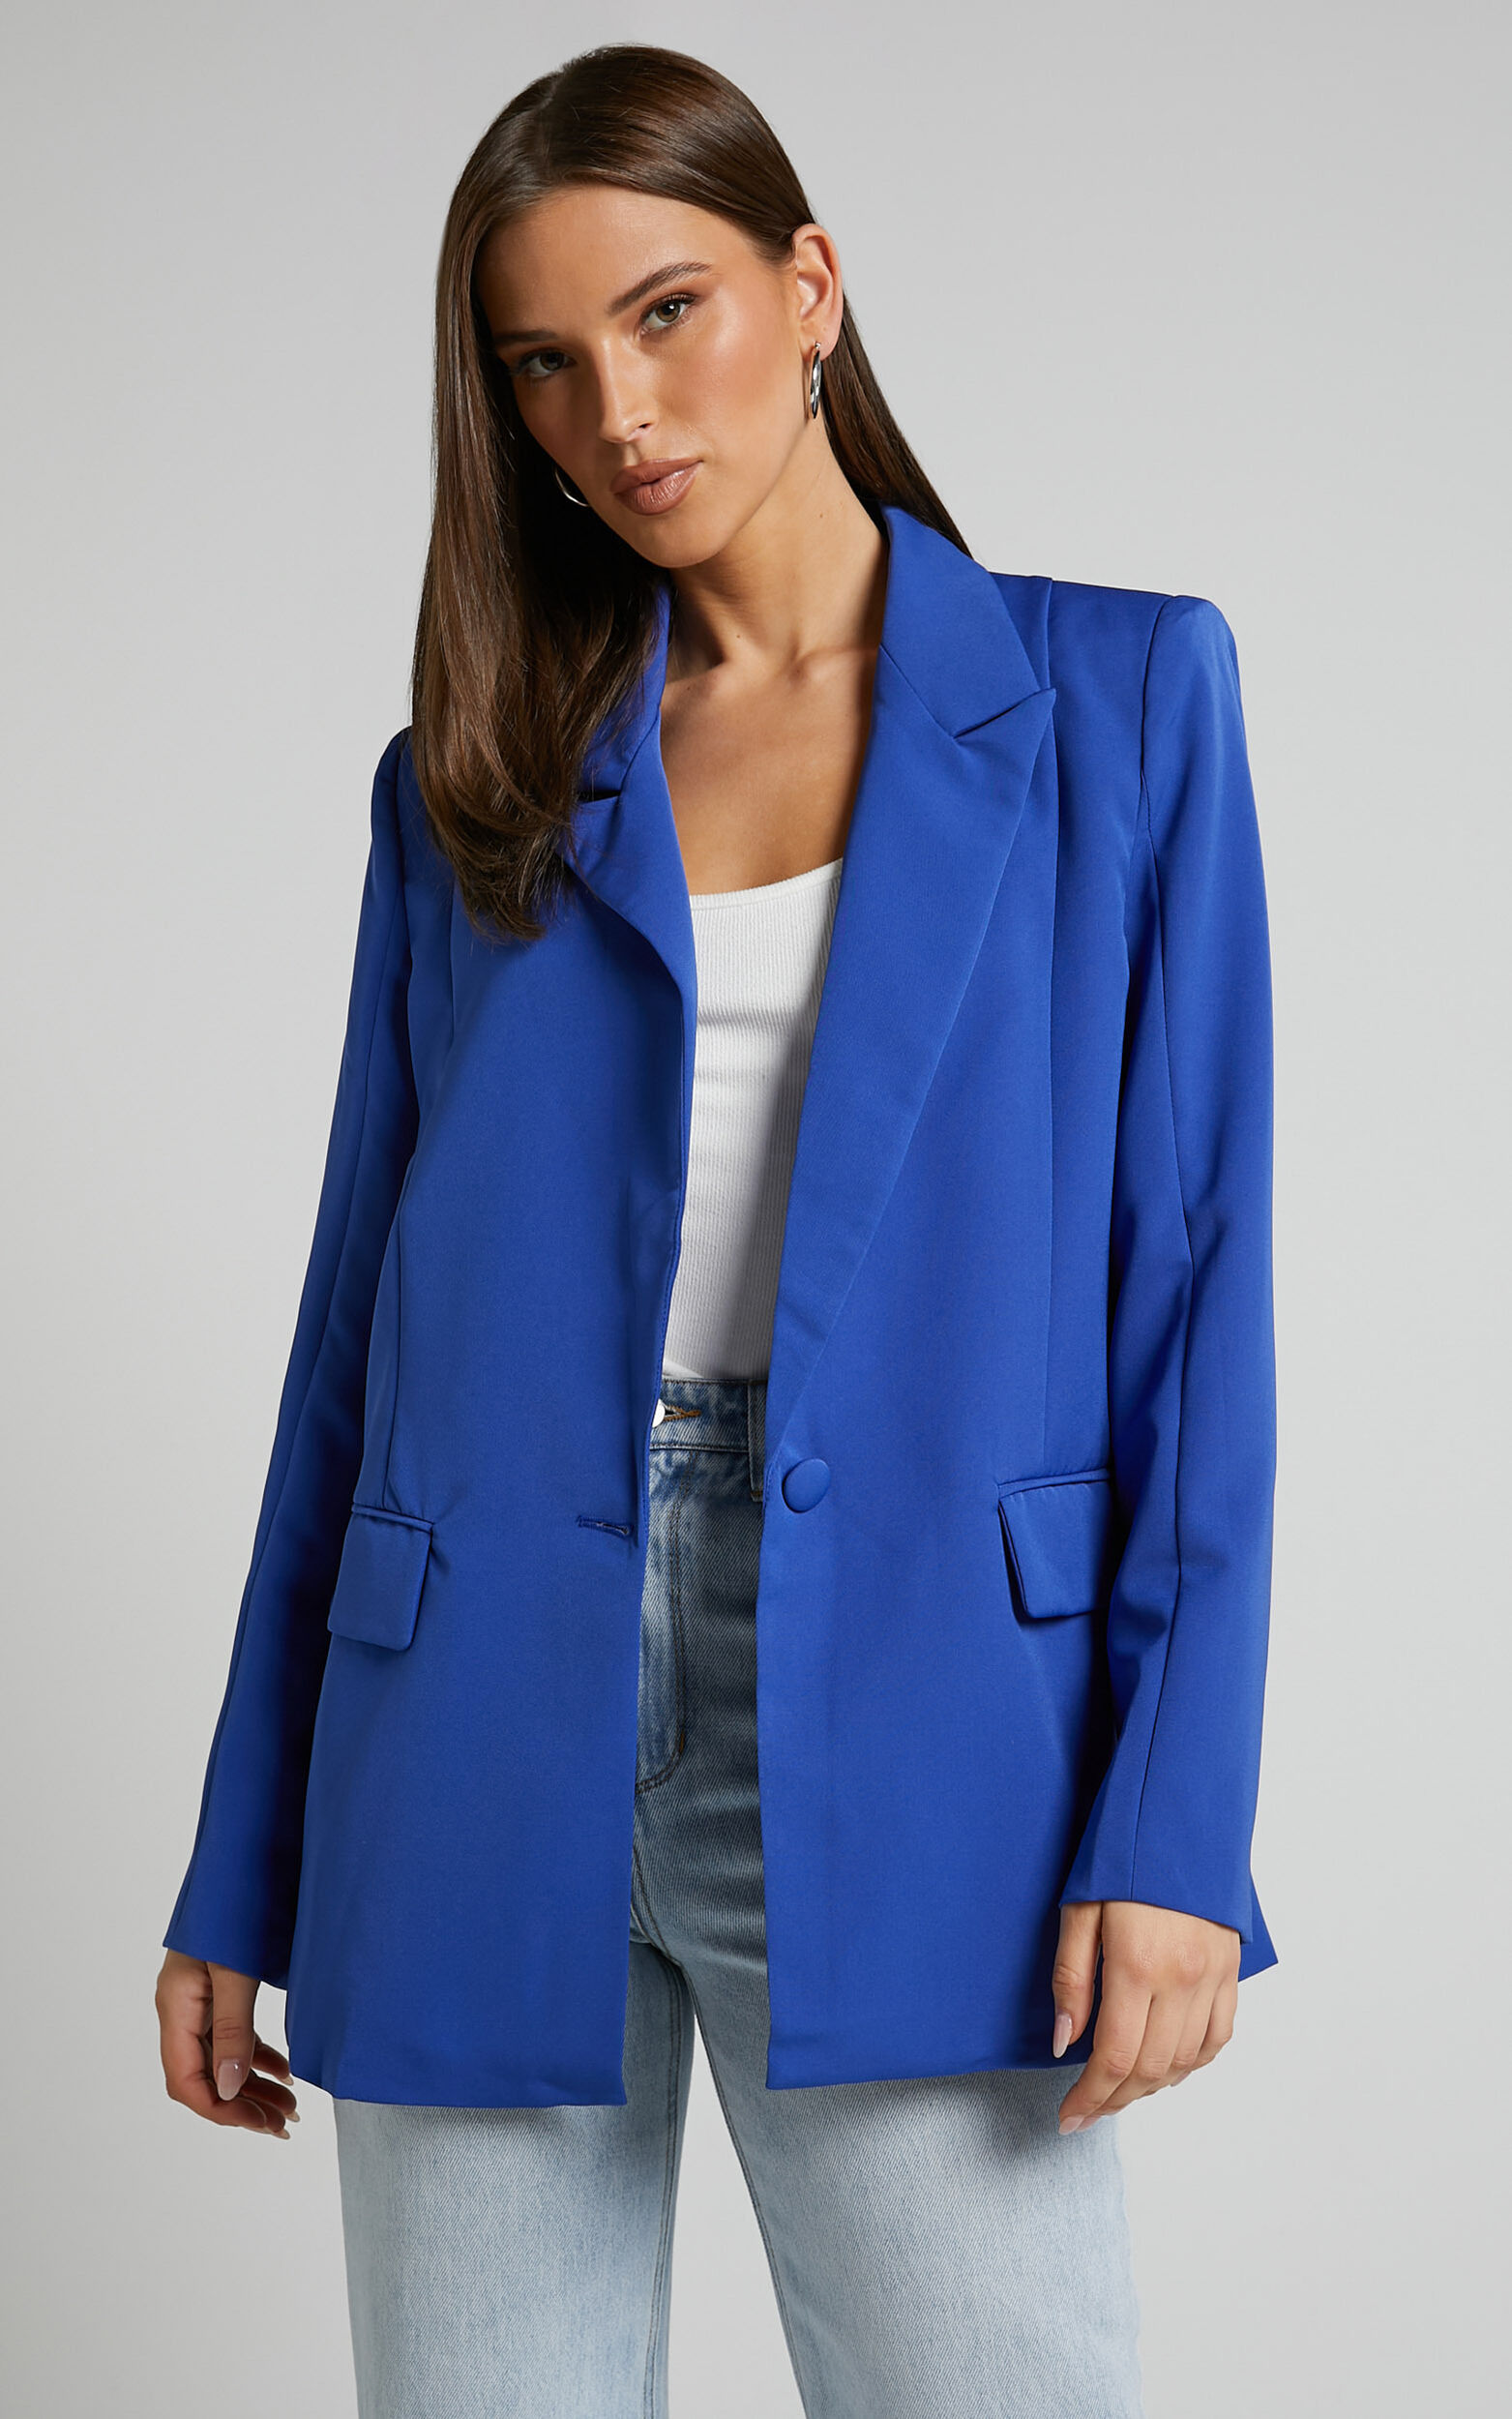 Women's Blue Tweed Jacket, White V-neck T-shirt, Blue Ripped